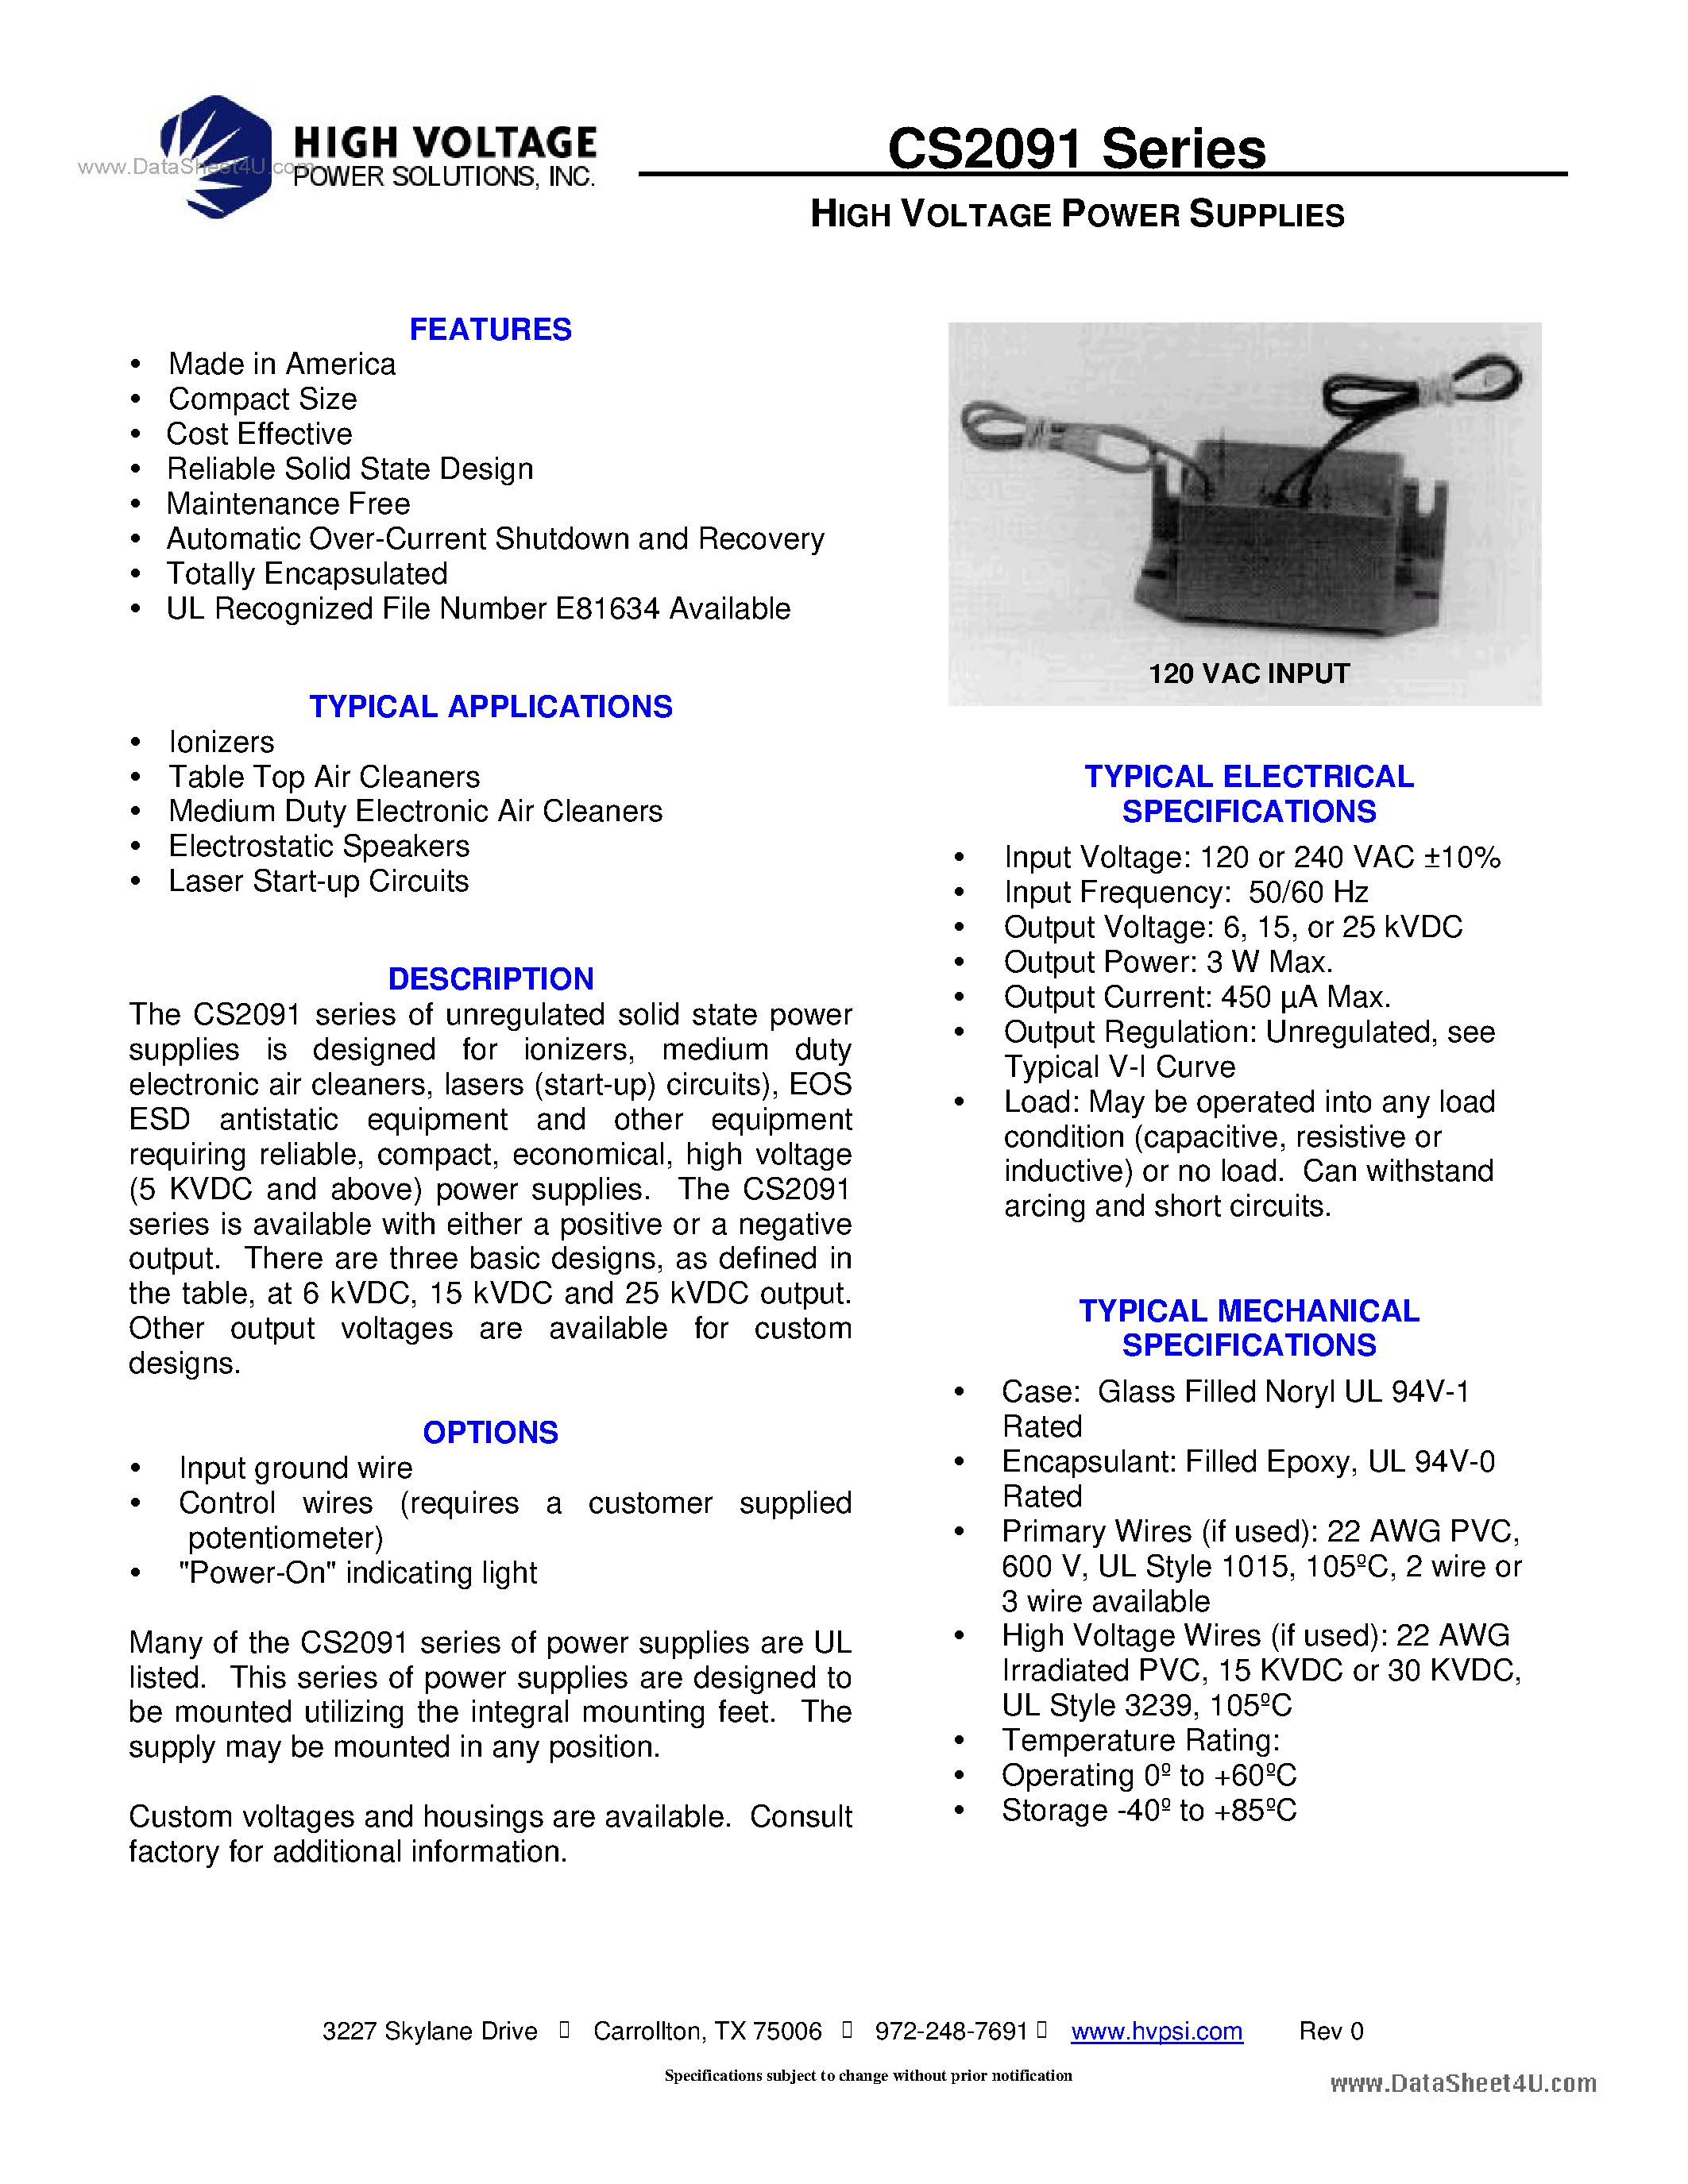 Datasheet CS2091 - High Voltage Power Supplies page 1